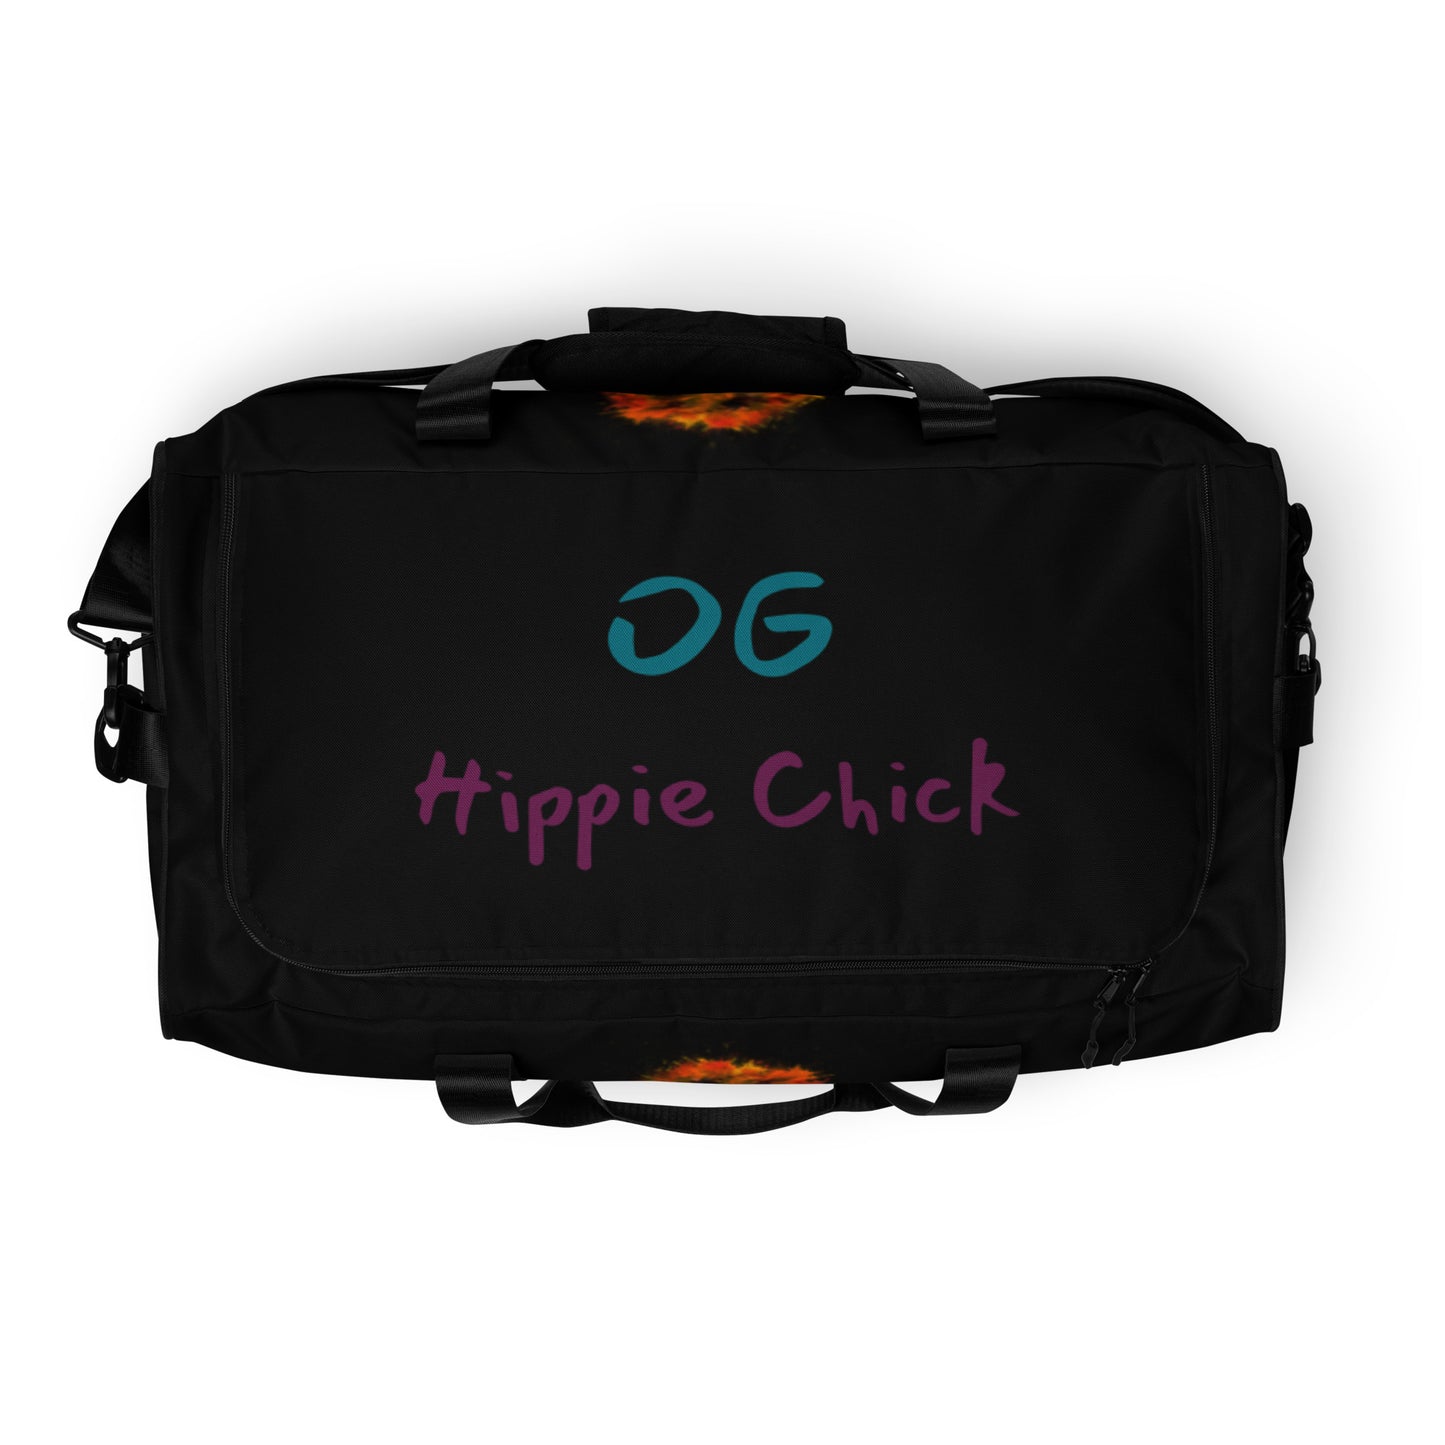 Black Duffle Bag - OG Hippie Chick